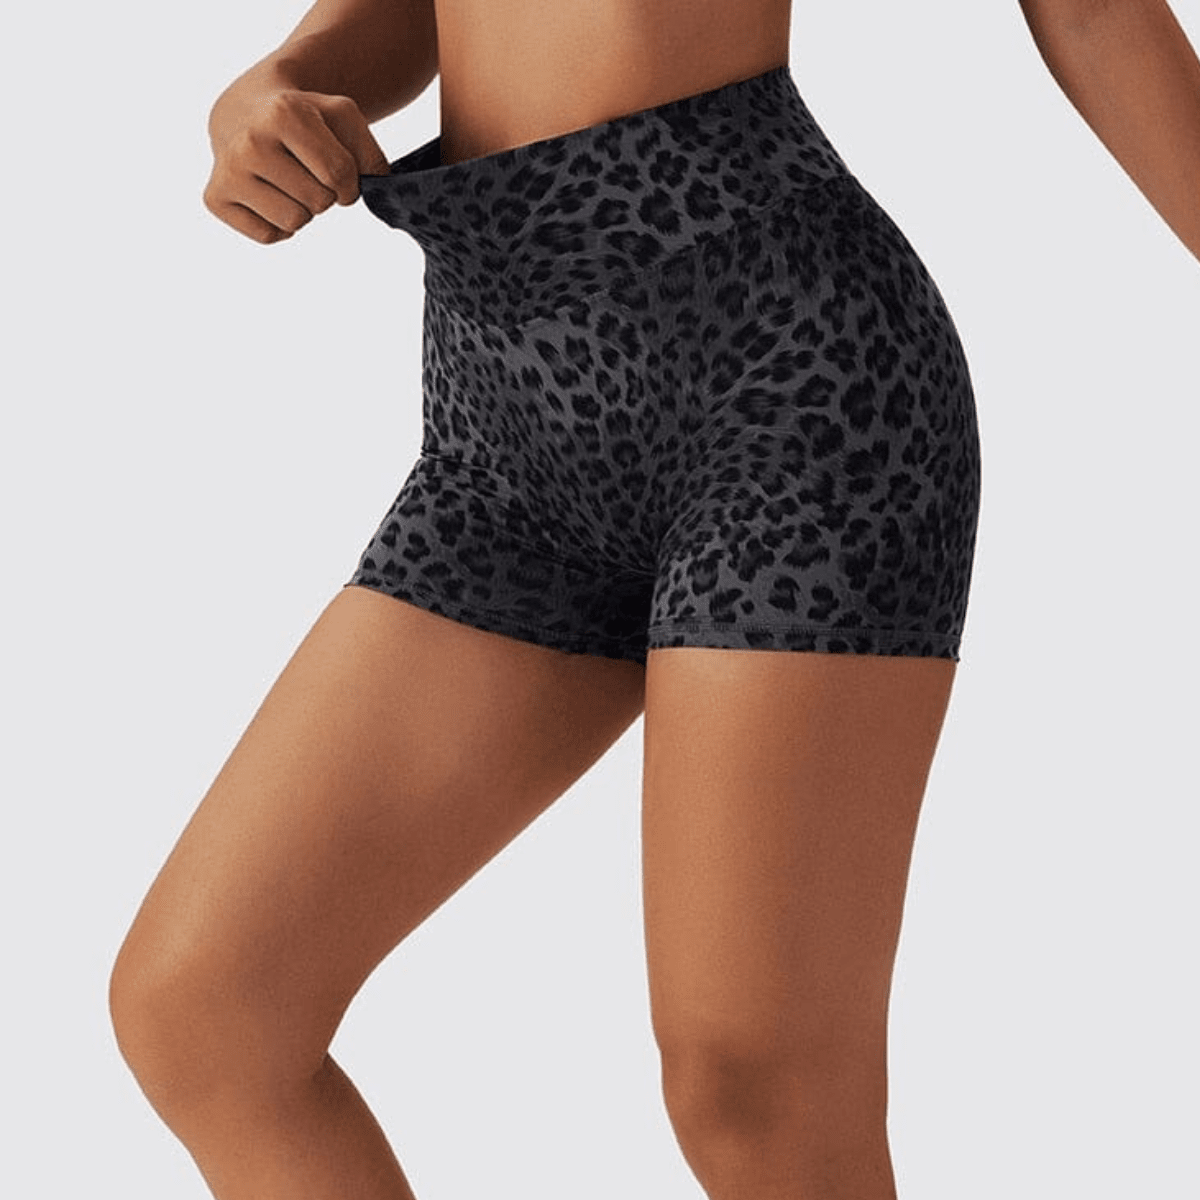 Chic Leopard Shorts Shorts Starlethics Grayish Black S 